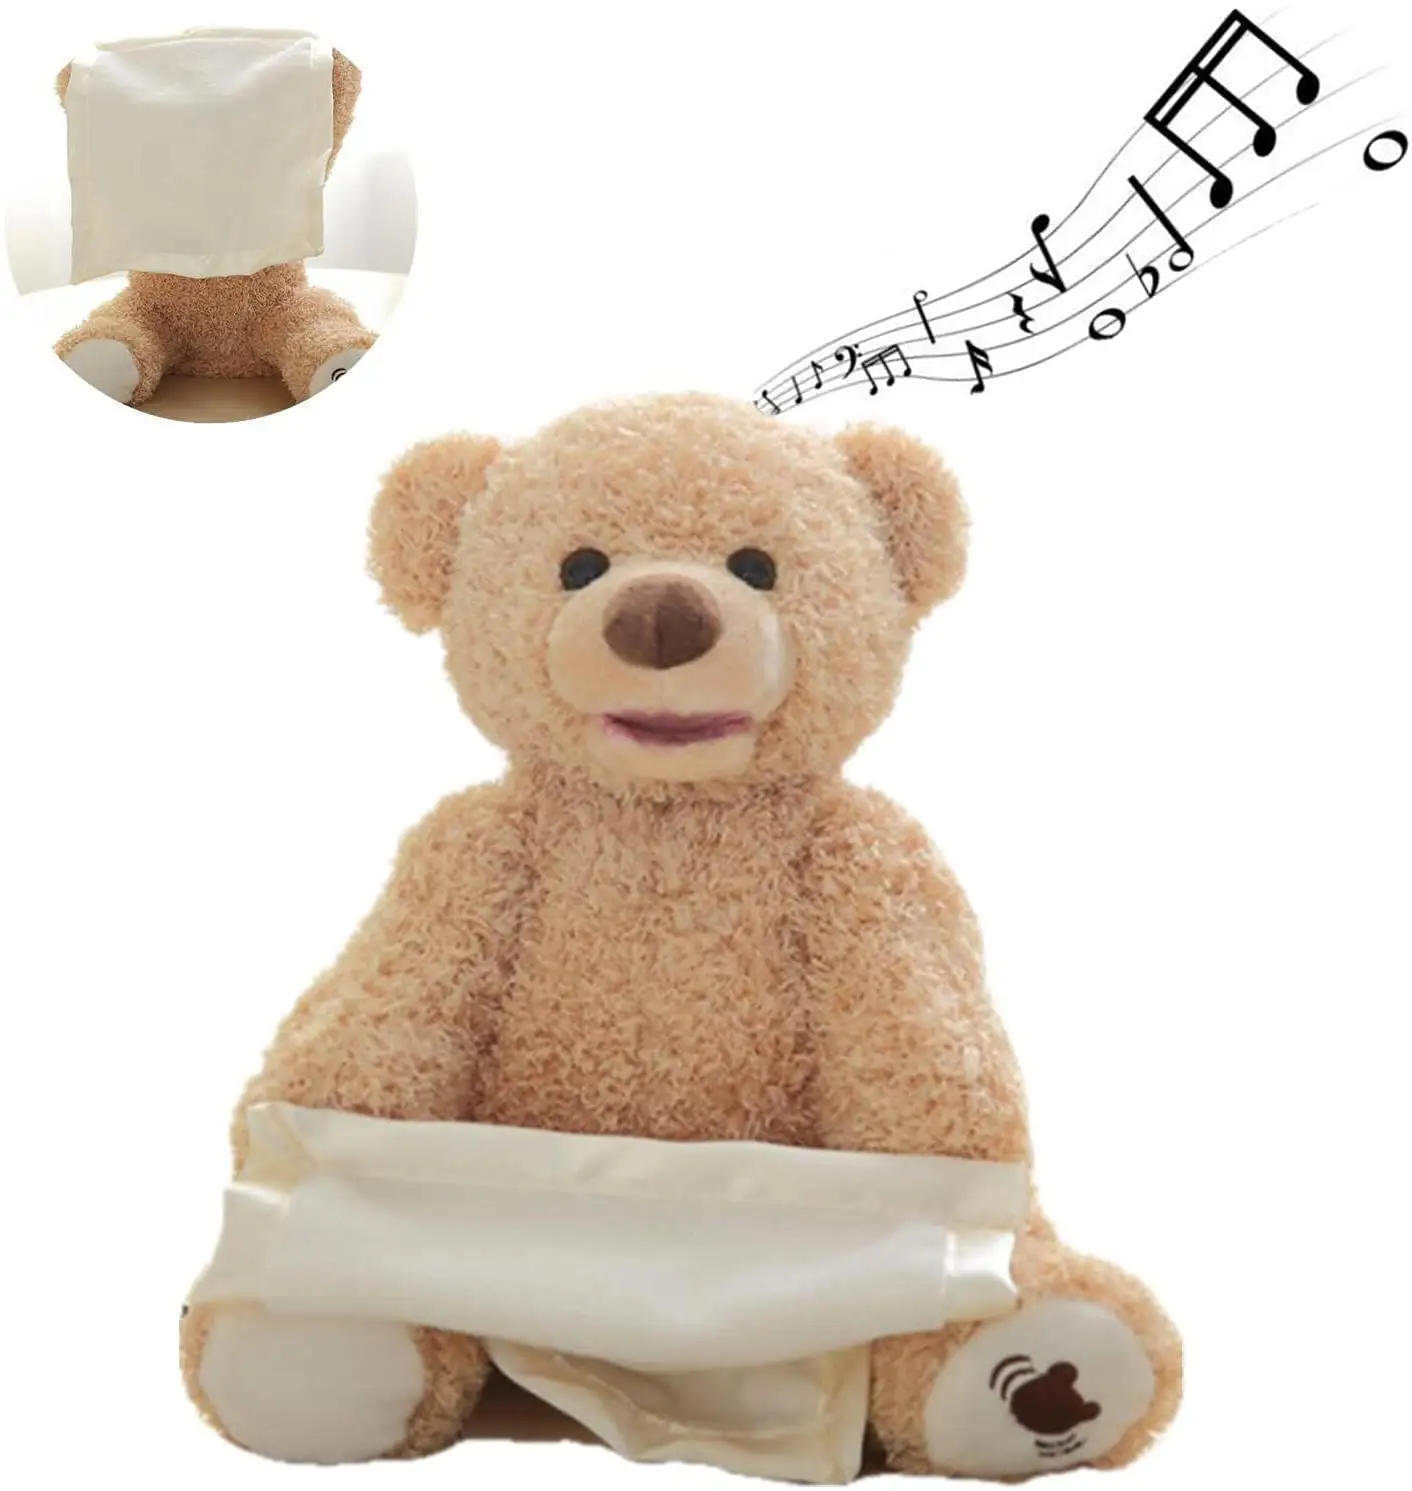 30CM Robot Teddy Bear Hide And Seek Animated Electronic Bear Music Stuffed Animal Plush Talking Play Seek Shy Bear Gift For Kids